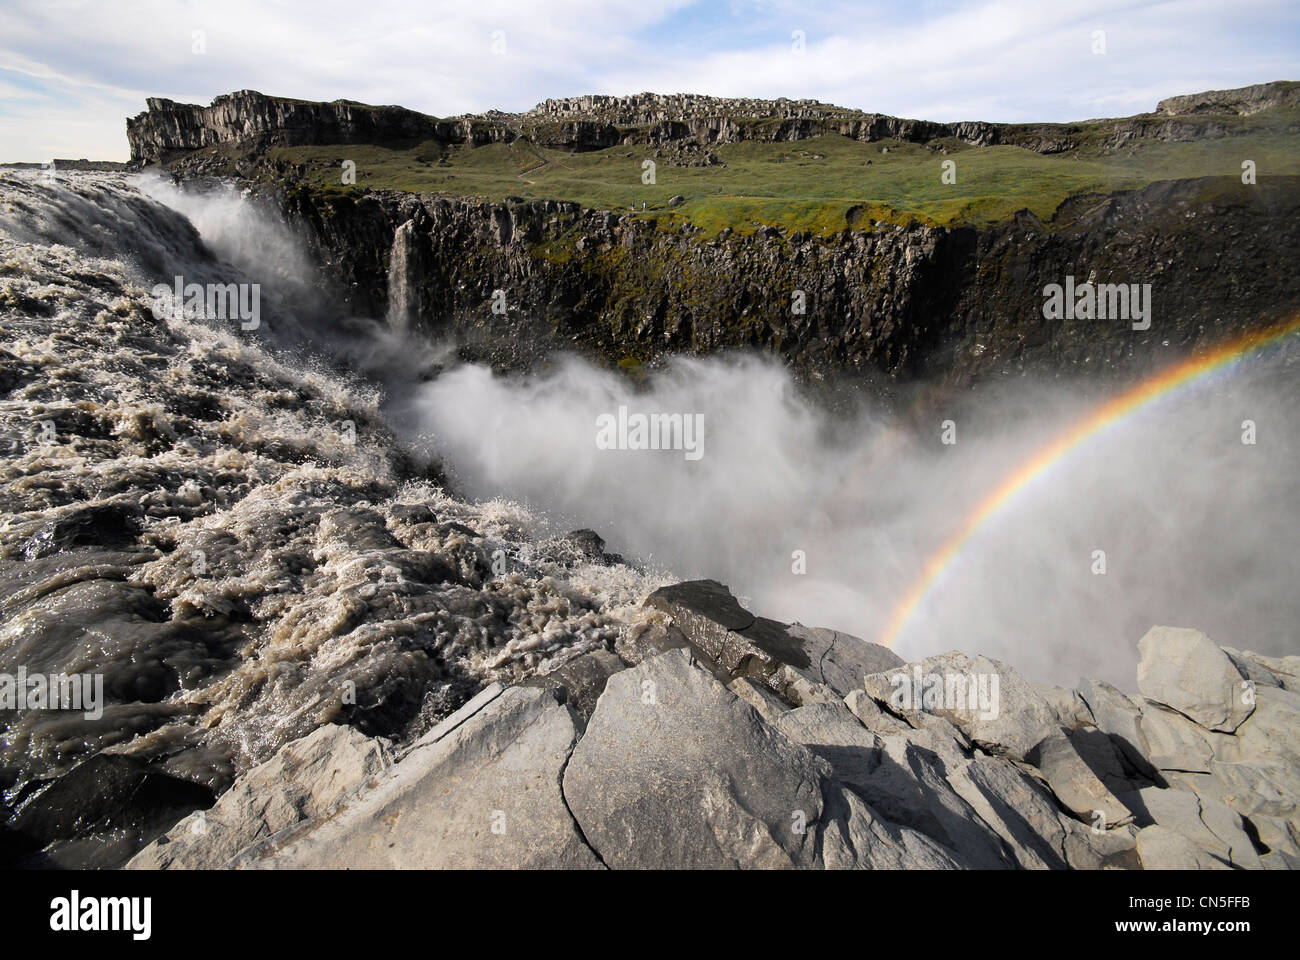 Iceland, Nordurland Eystra Region, Jokulsargljufur National Park, rainbow over Dettifoss Waterfall and Jokulssa a Fjollum River Stock Photo